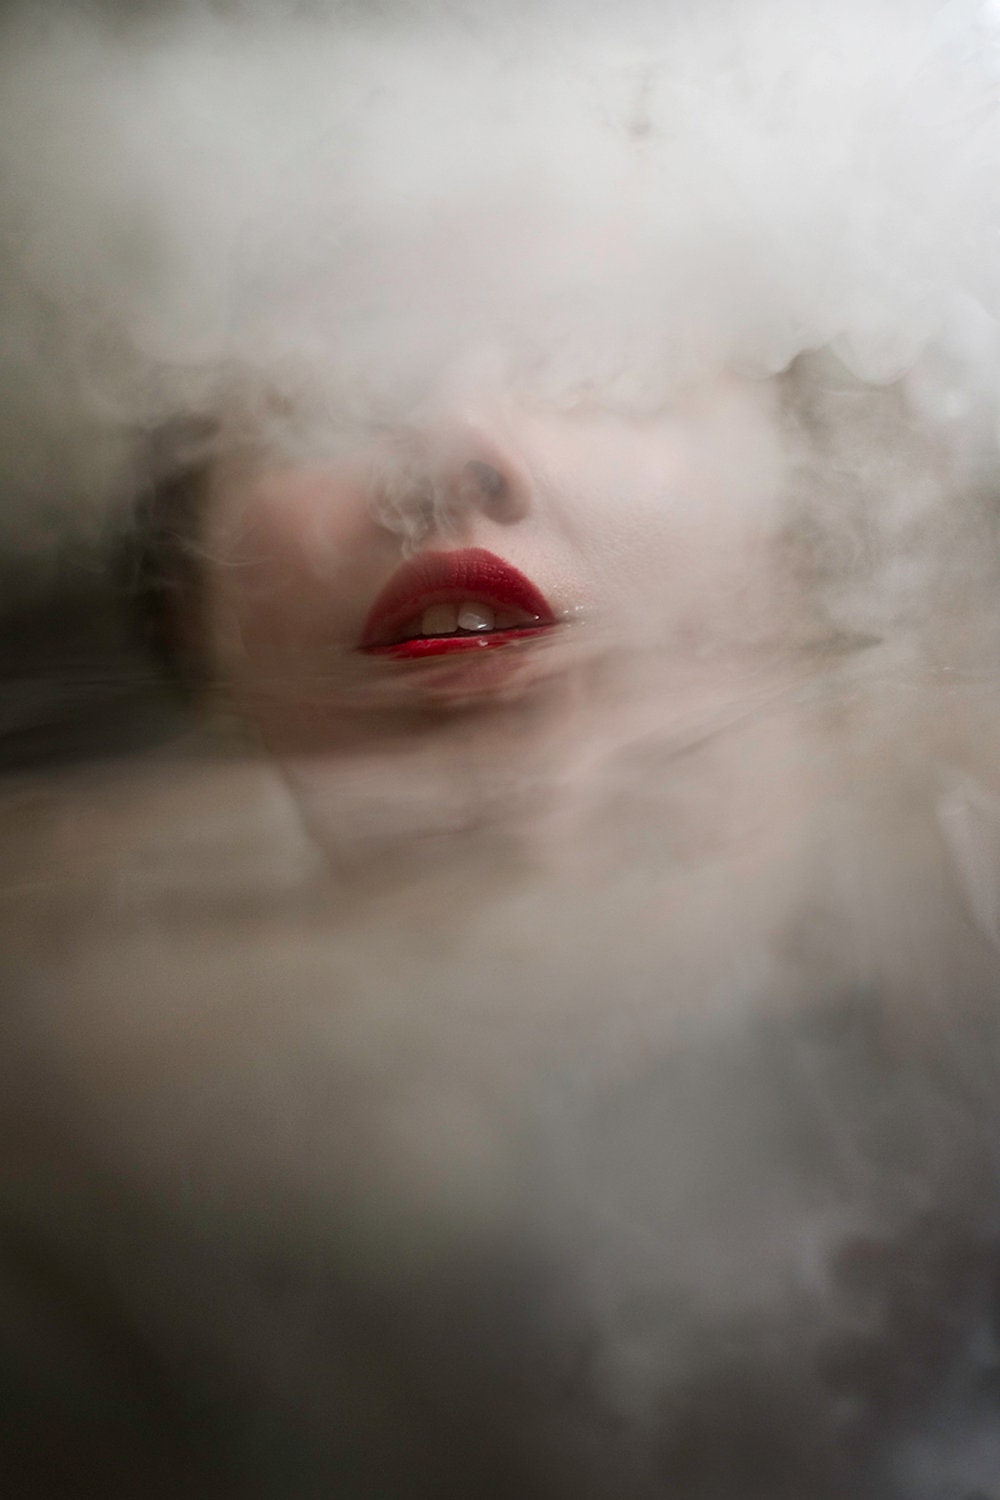 12" x 8" - Conceptual Digital Photography - Fog - Dream - Woman - Light - Water - Mysterious - Psychological - Fine Art - Print - MichelleFader